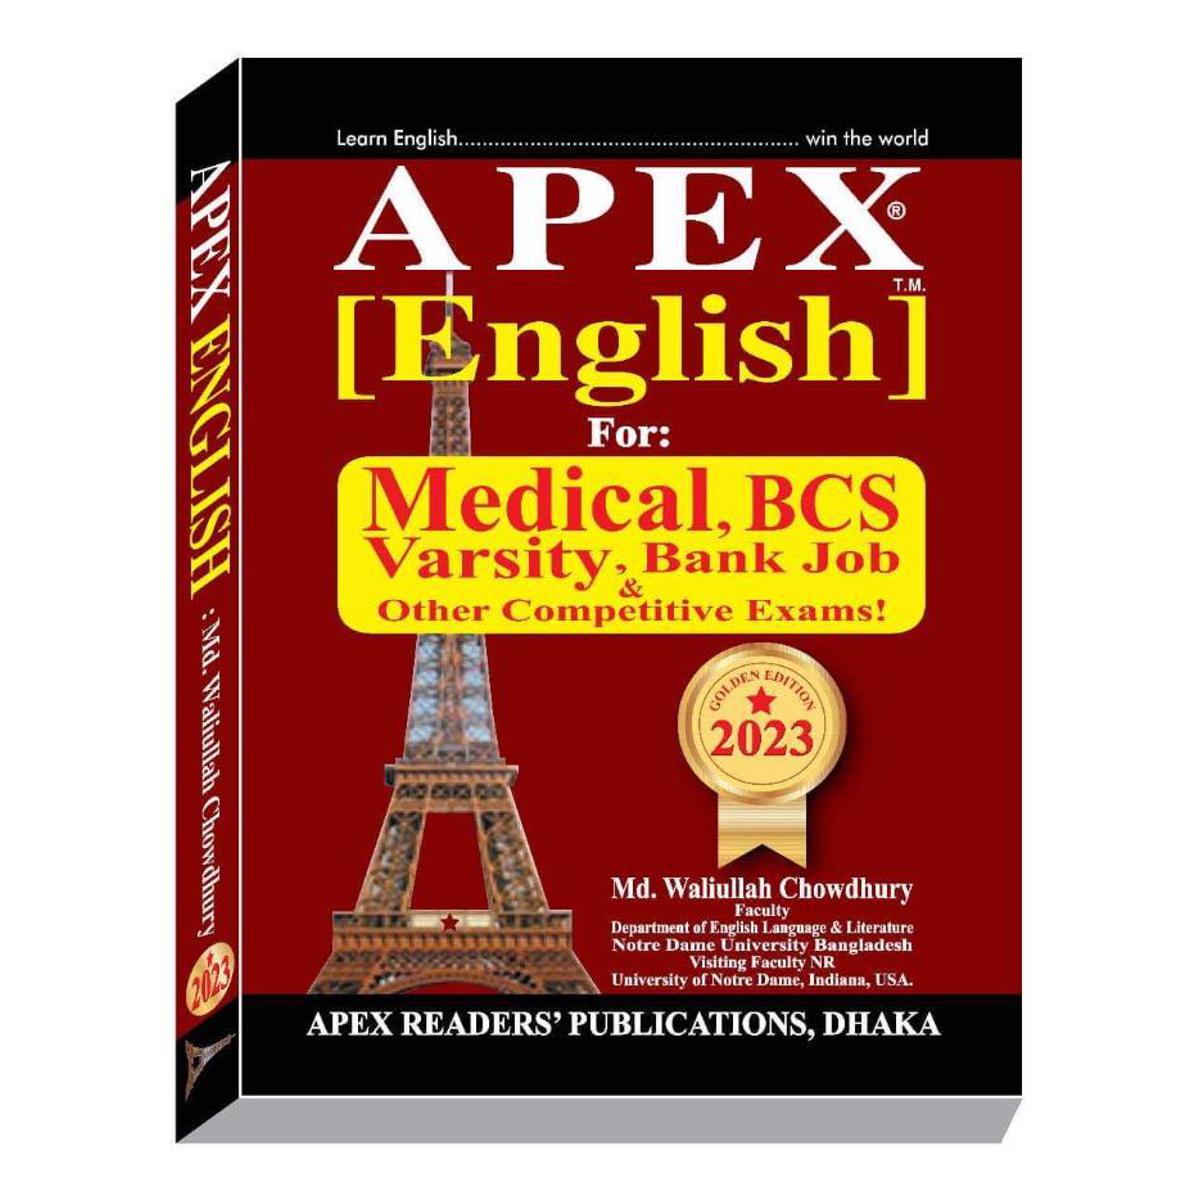 Ape_x English Grammar Book for Medical, BCS examination